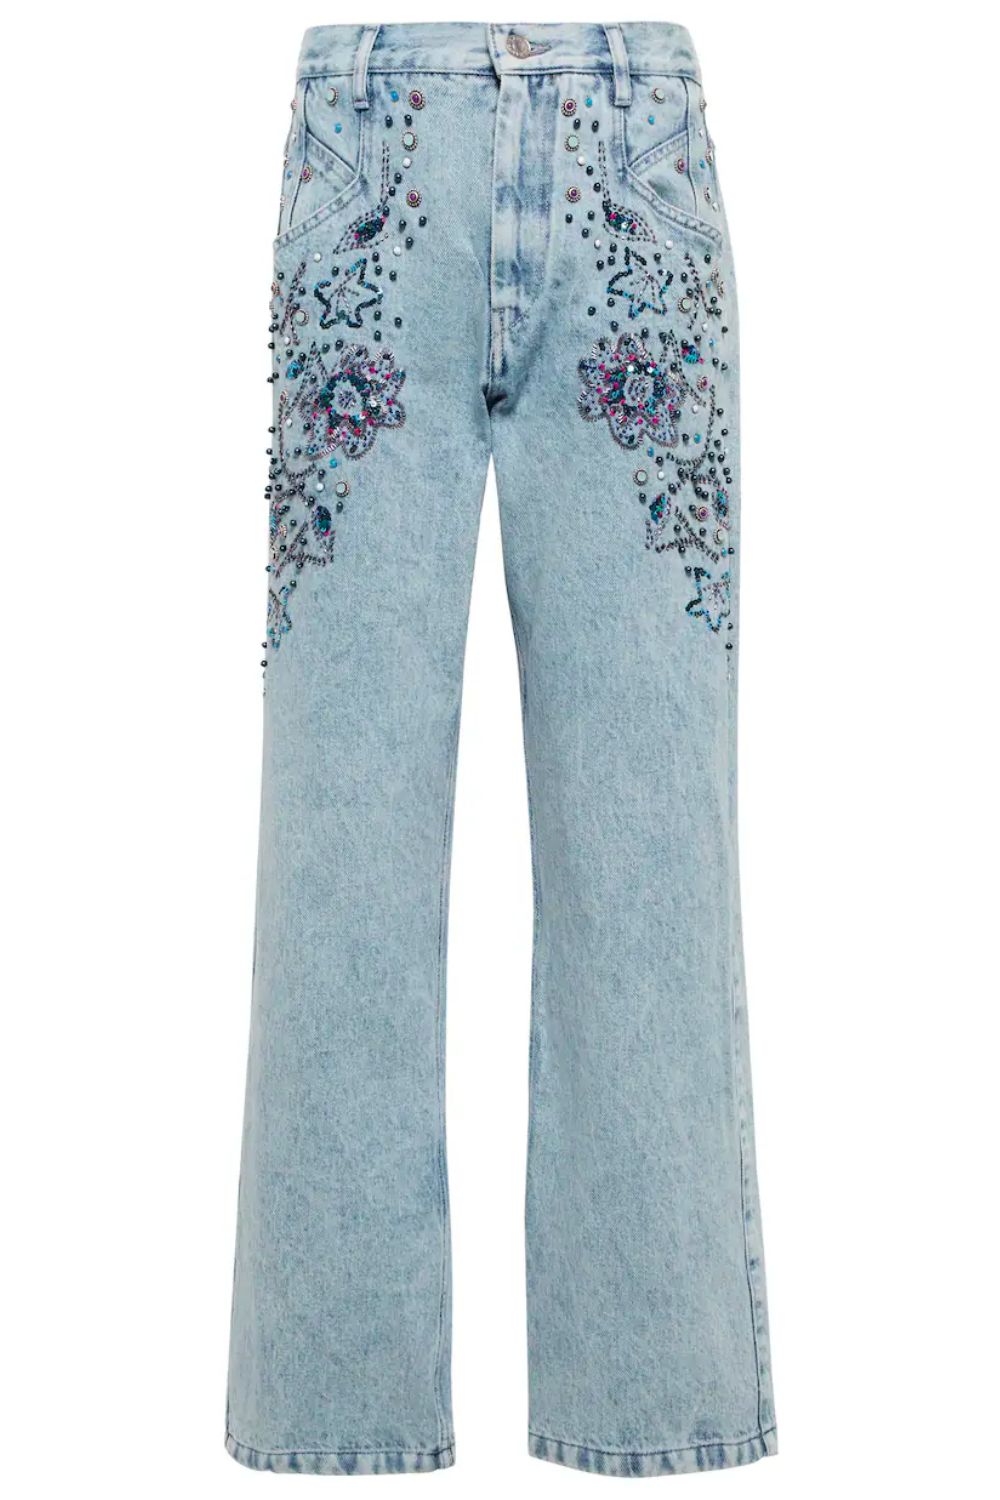 Katie Holmes & Taylor Swift Are Brining Back Embellished Jeans